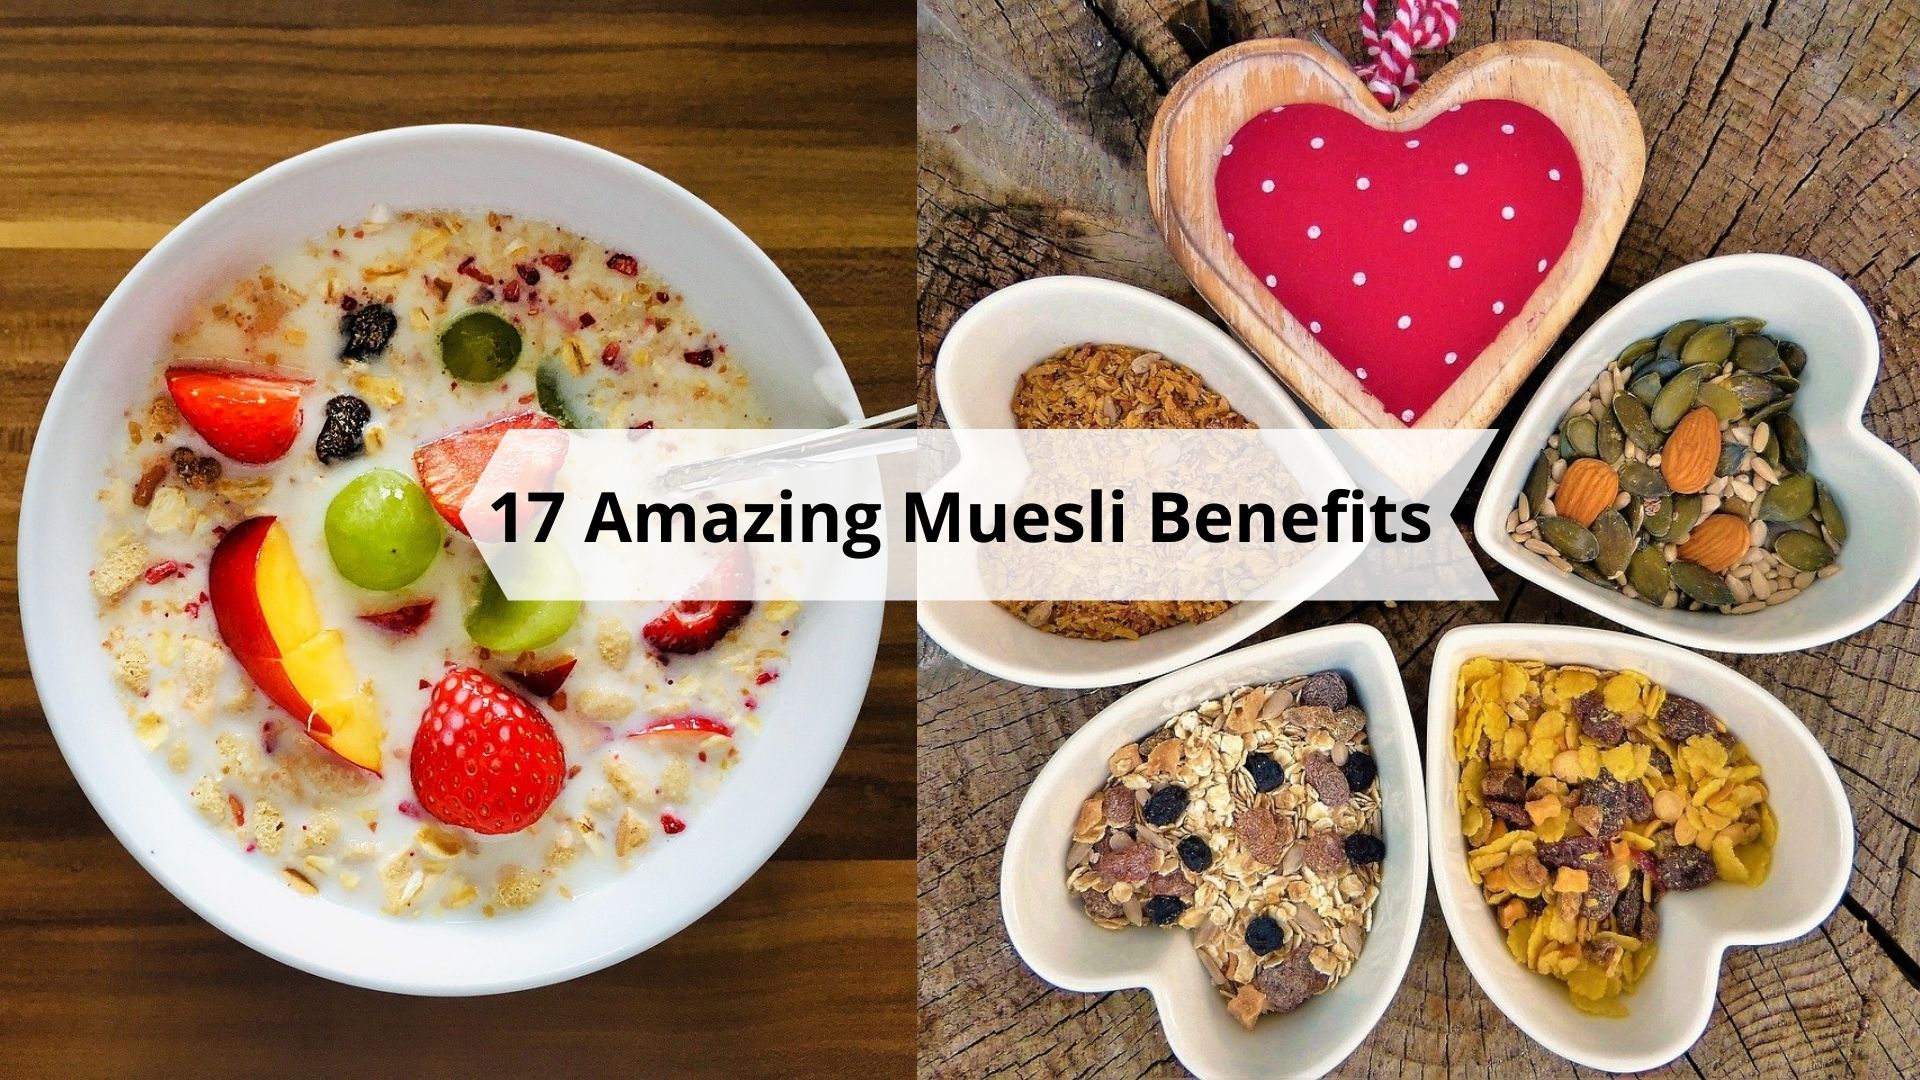 health benefits of muesli: what is muesli good for?